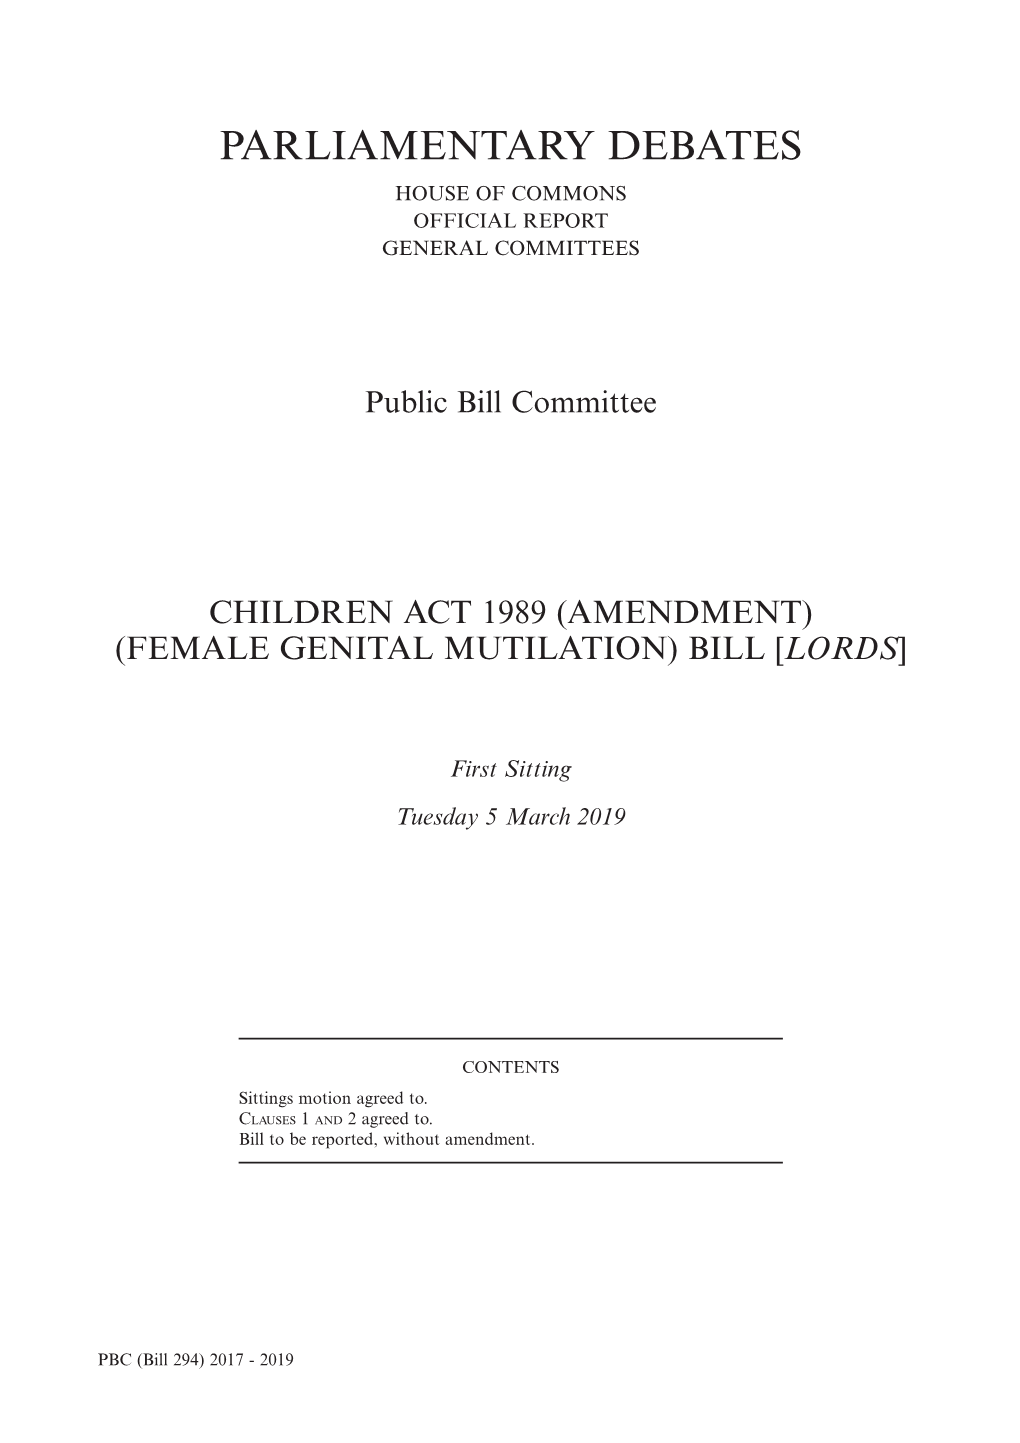 Children Act 1989 (Amendment) (Female Genital Mutilation) Bill [Lords]